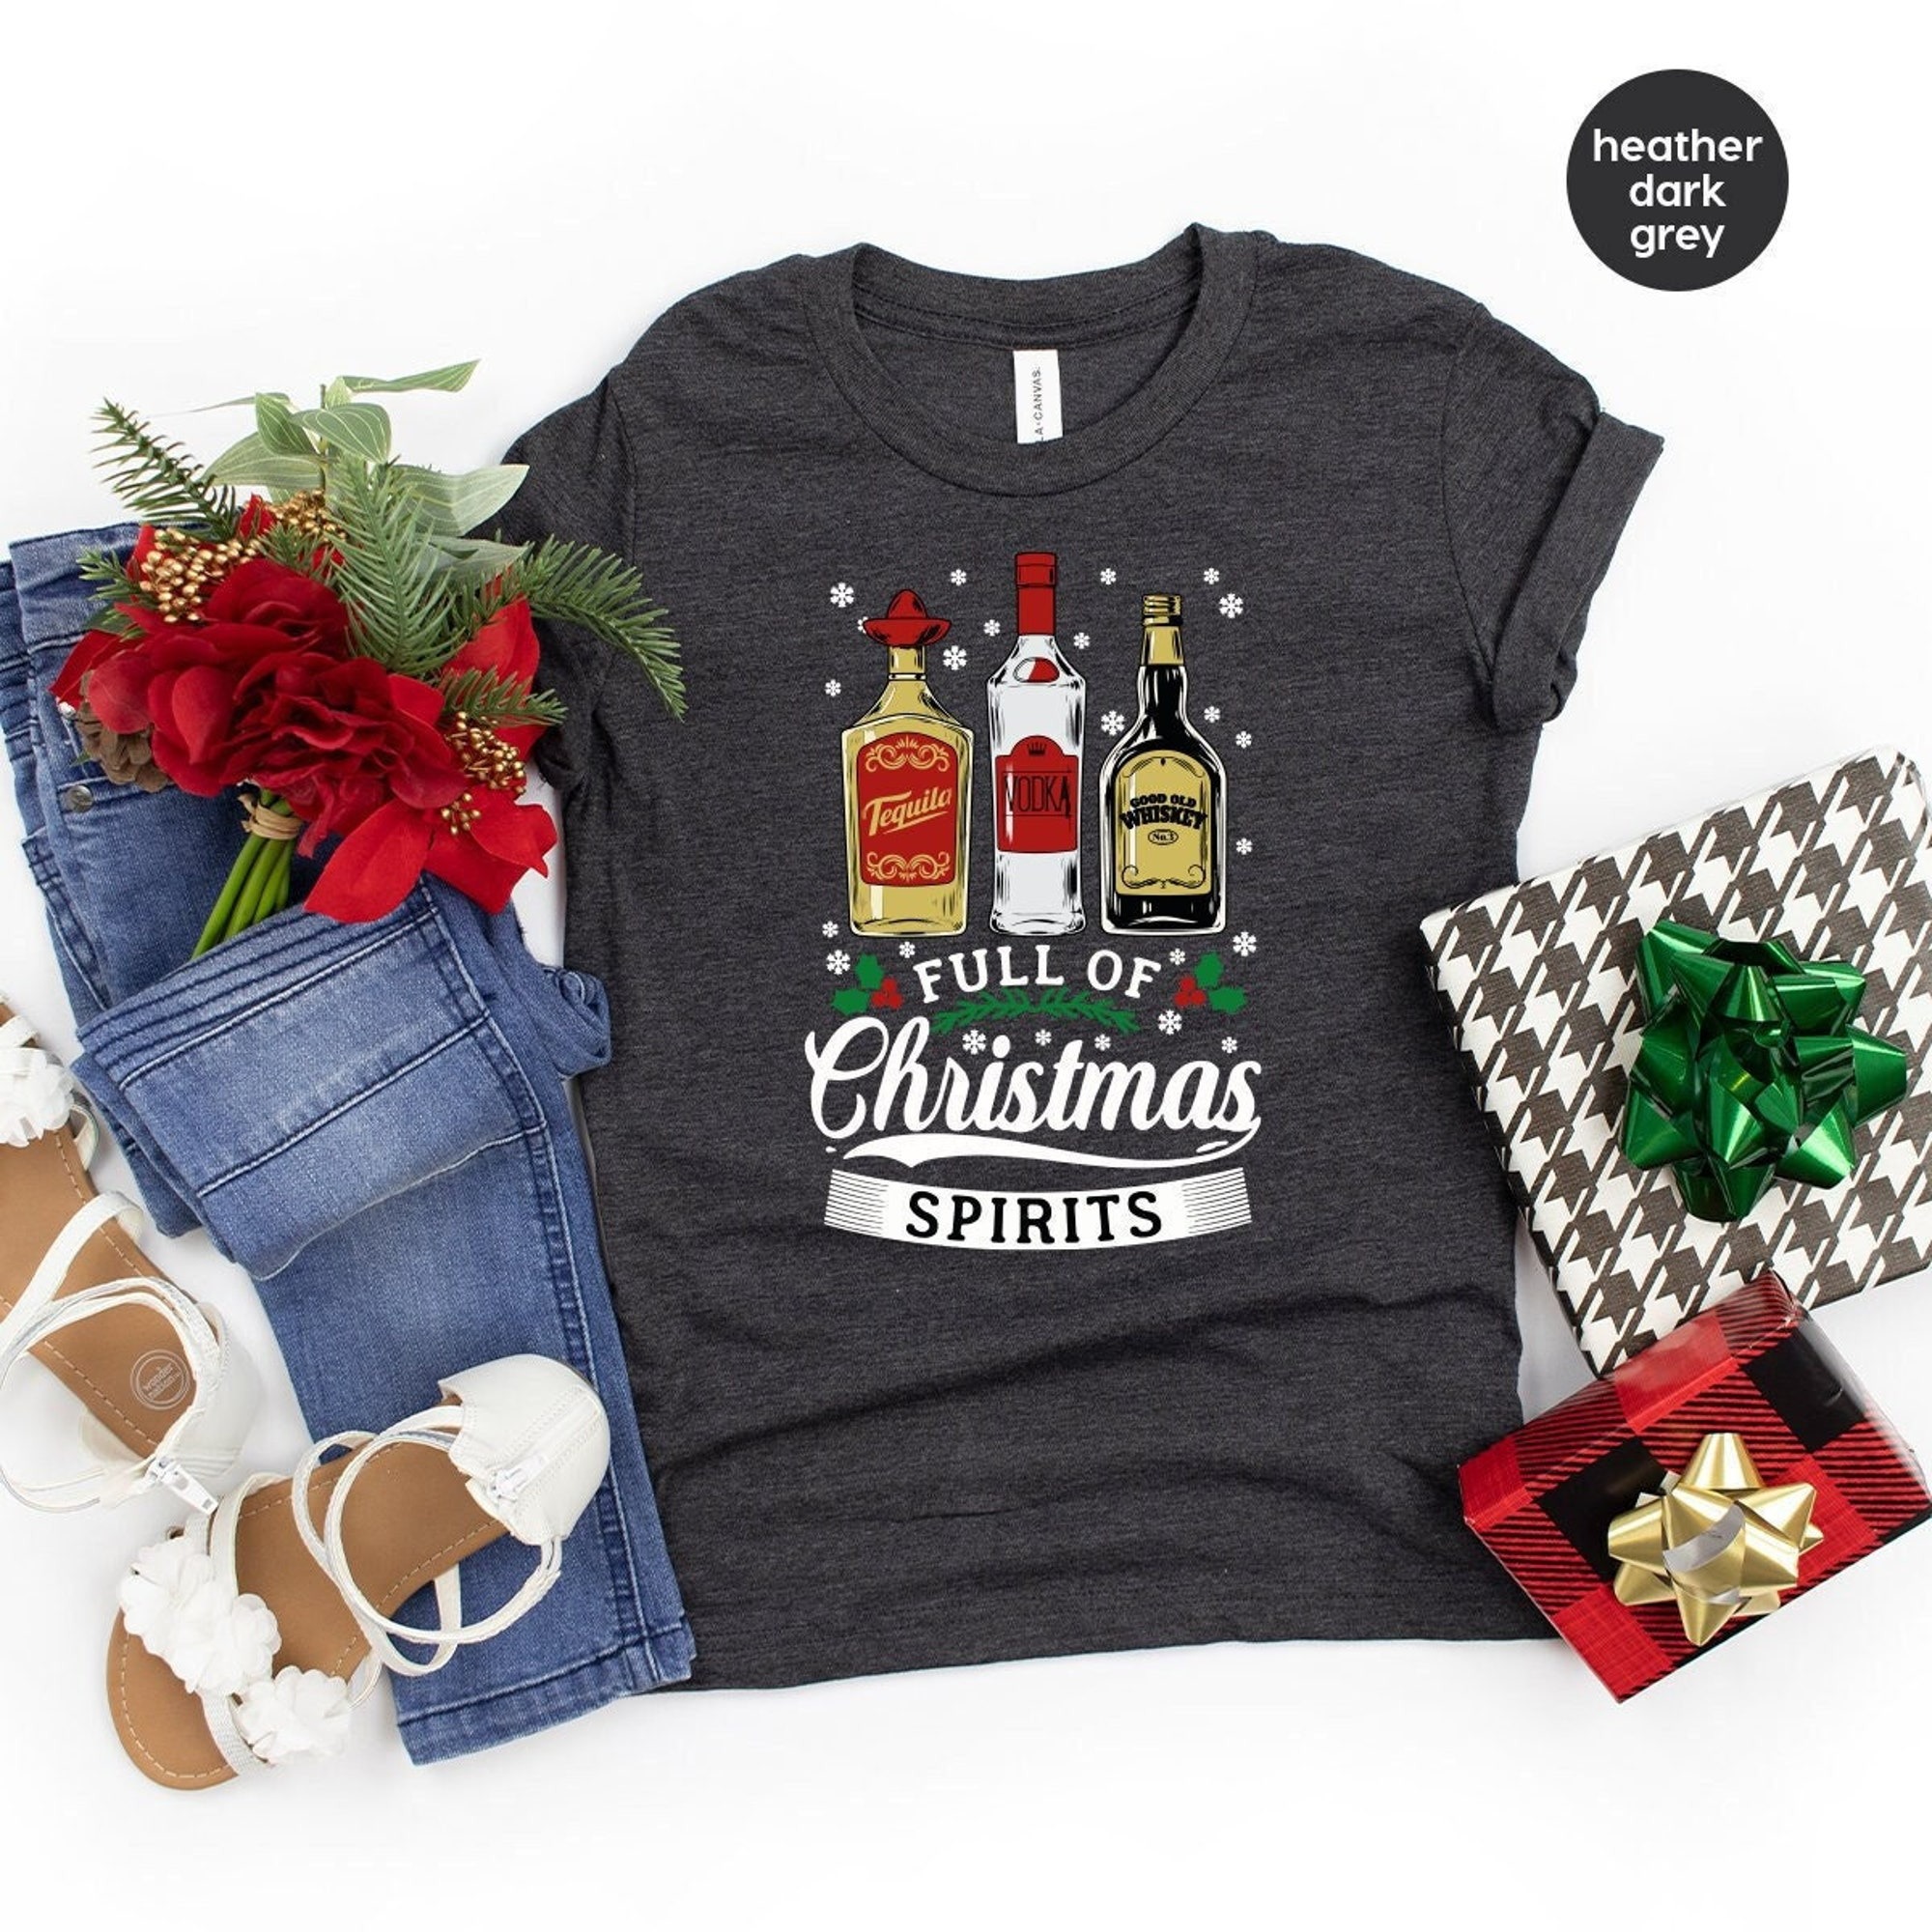 Tequila Vodka Whiskey T Shirt, Funny Christmas Shirt, Christmas Shirts, Drinking TShirt, Full Of Christmas Spirit Tee, Xmas Party T-Shirt